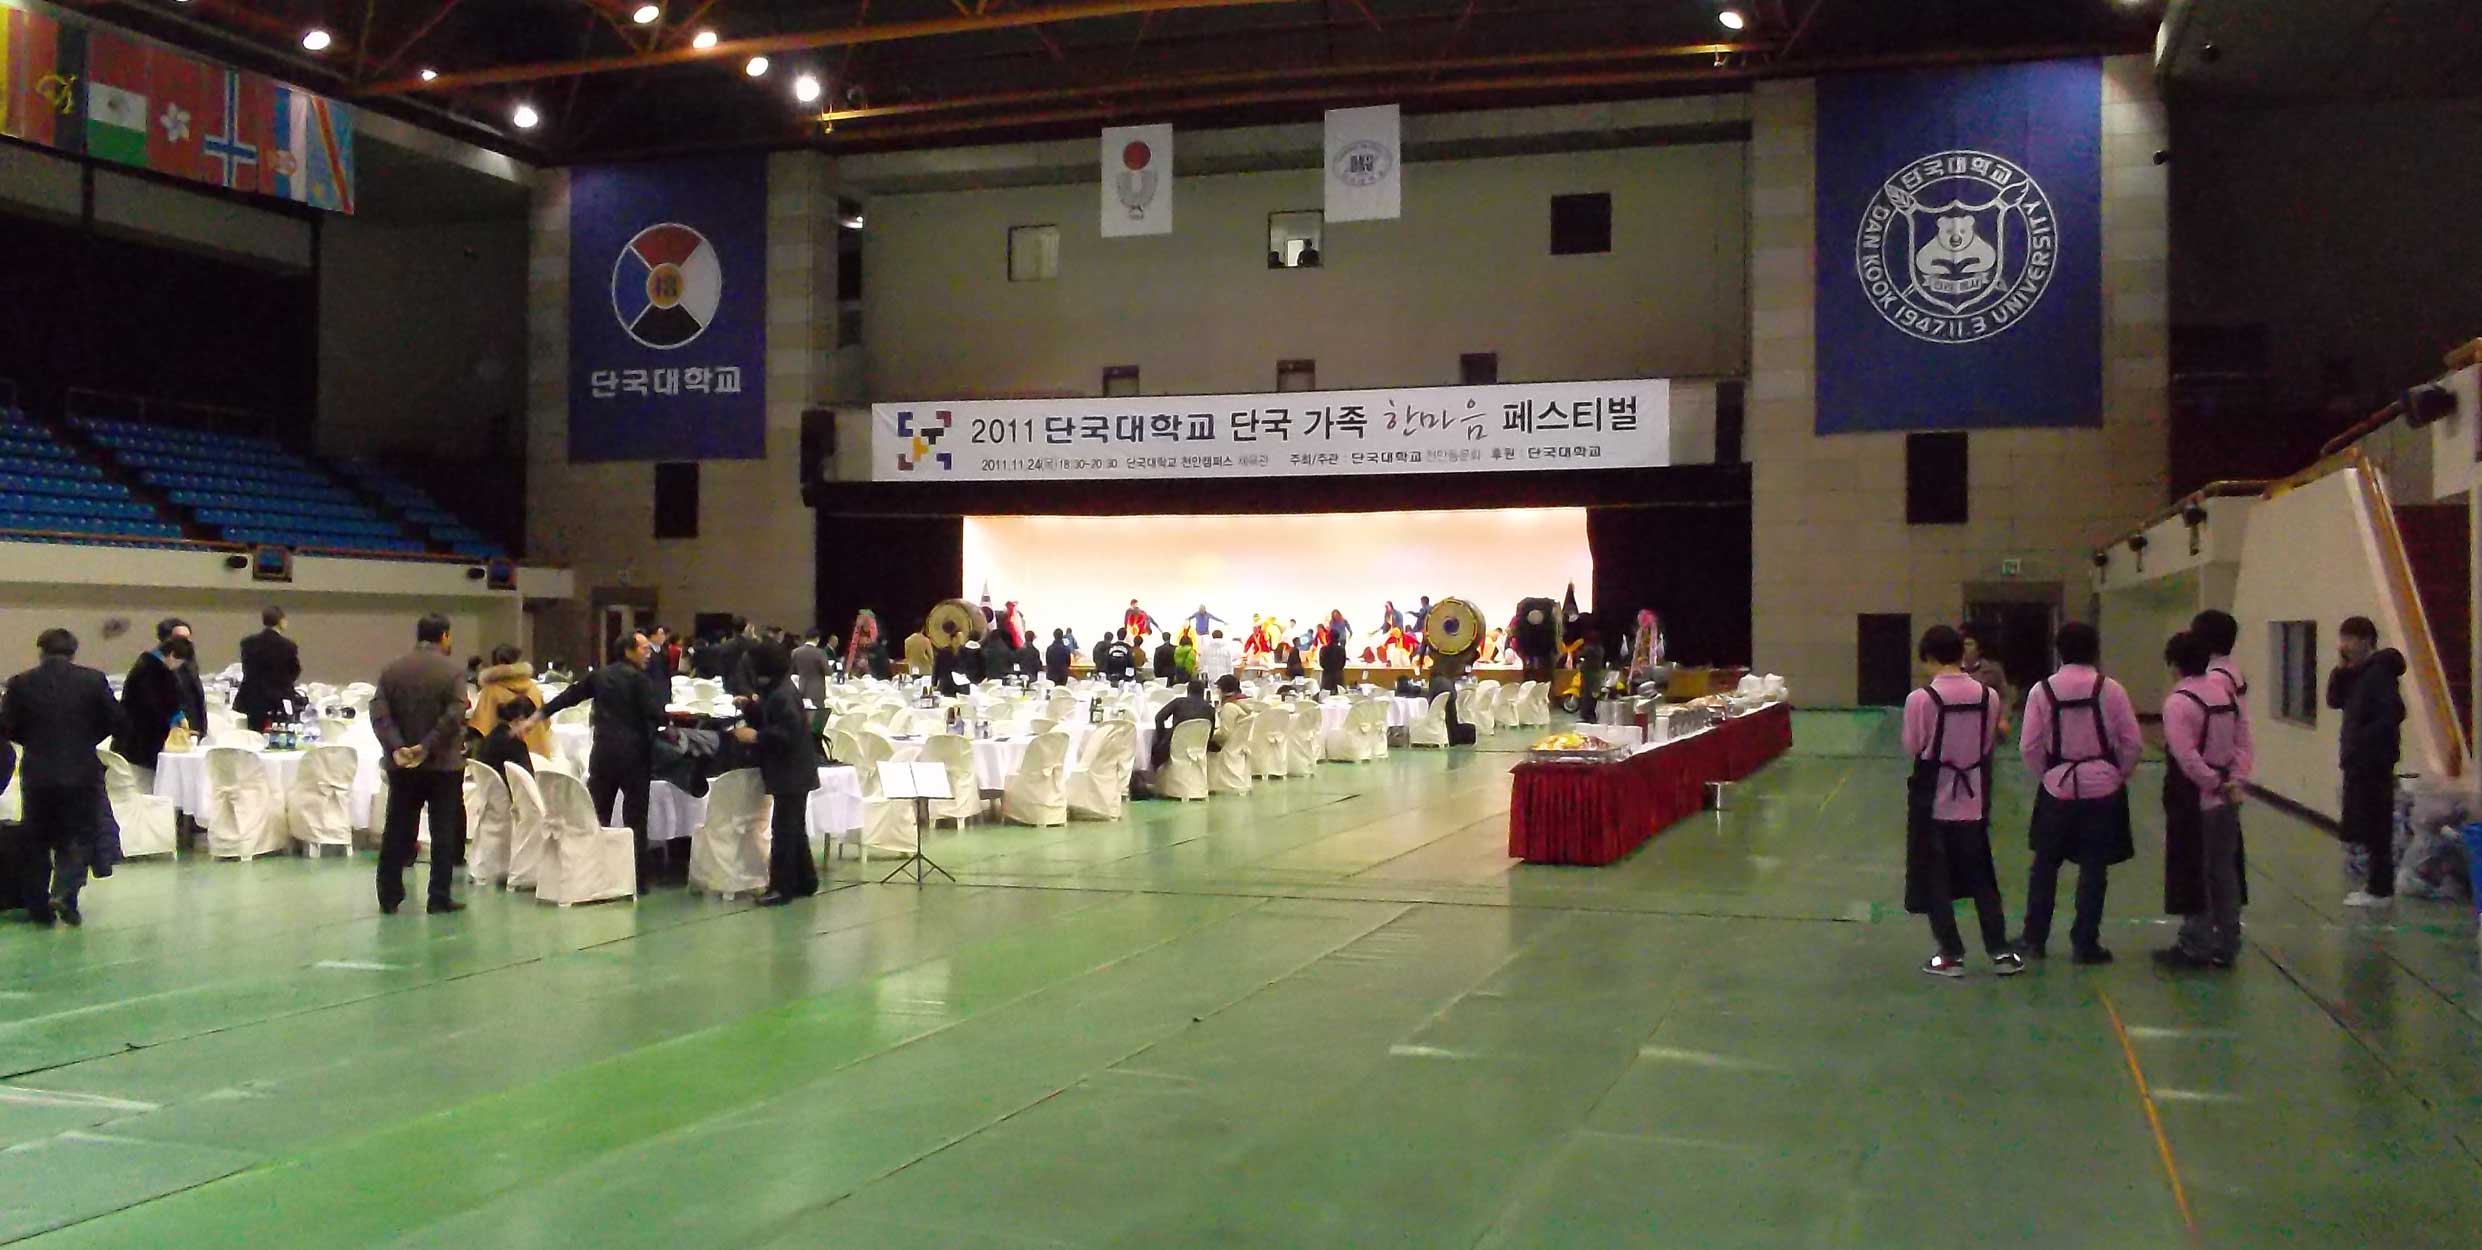 event at Dankook University